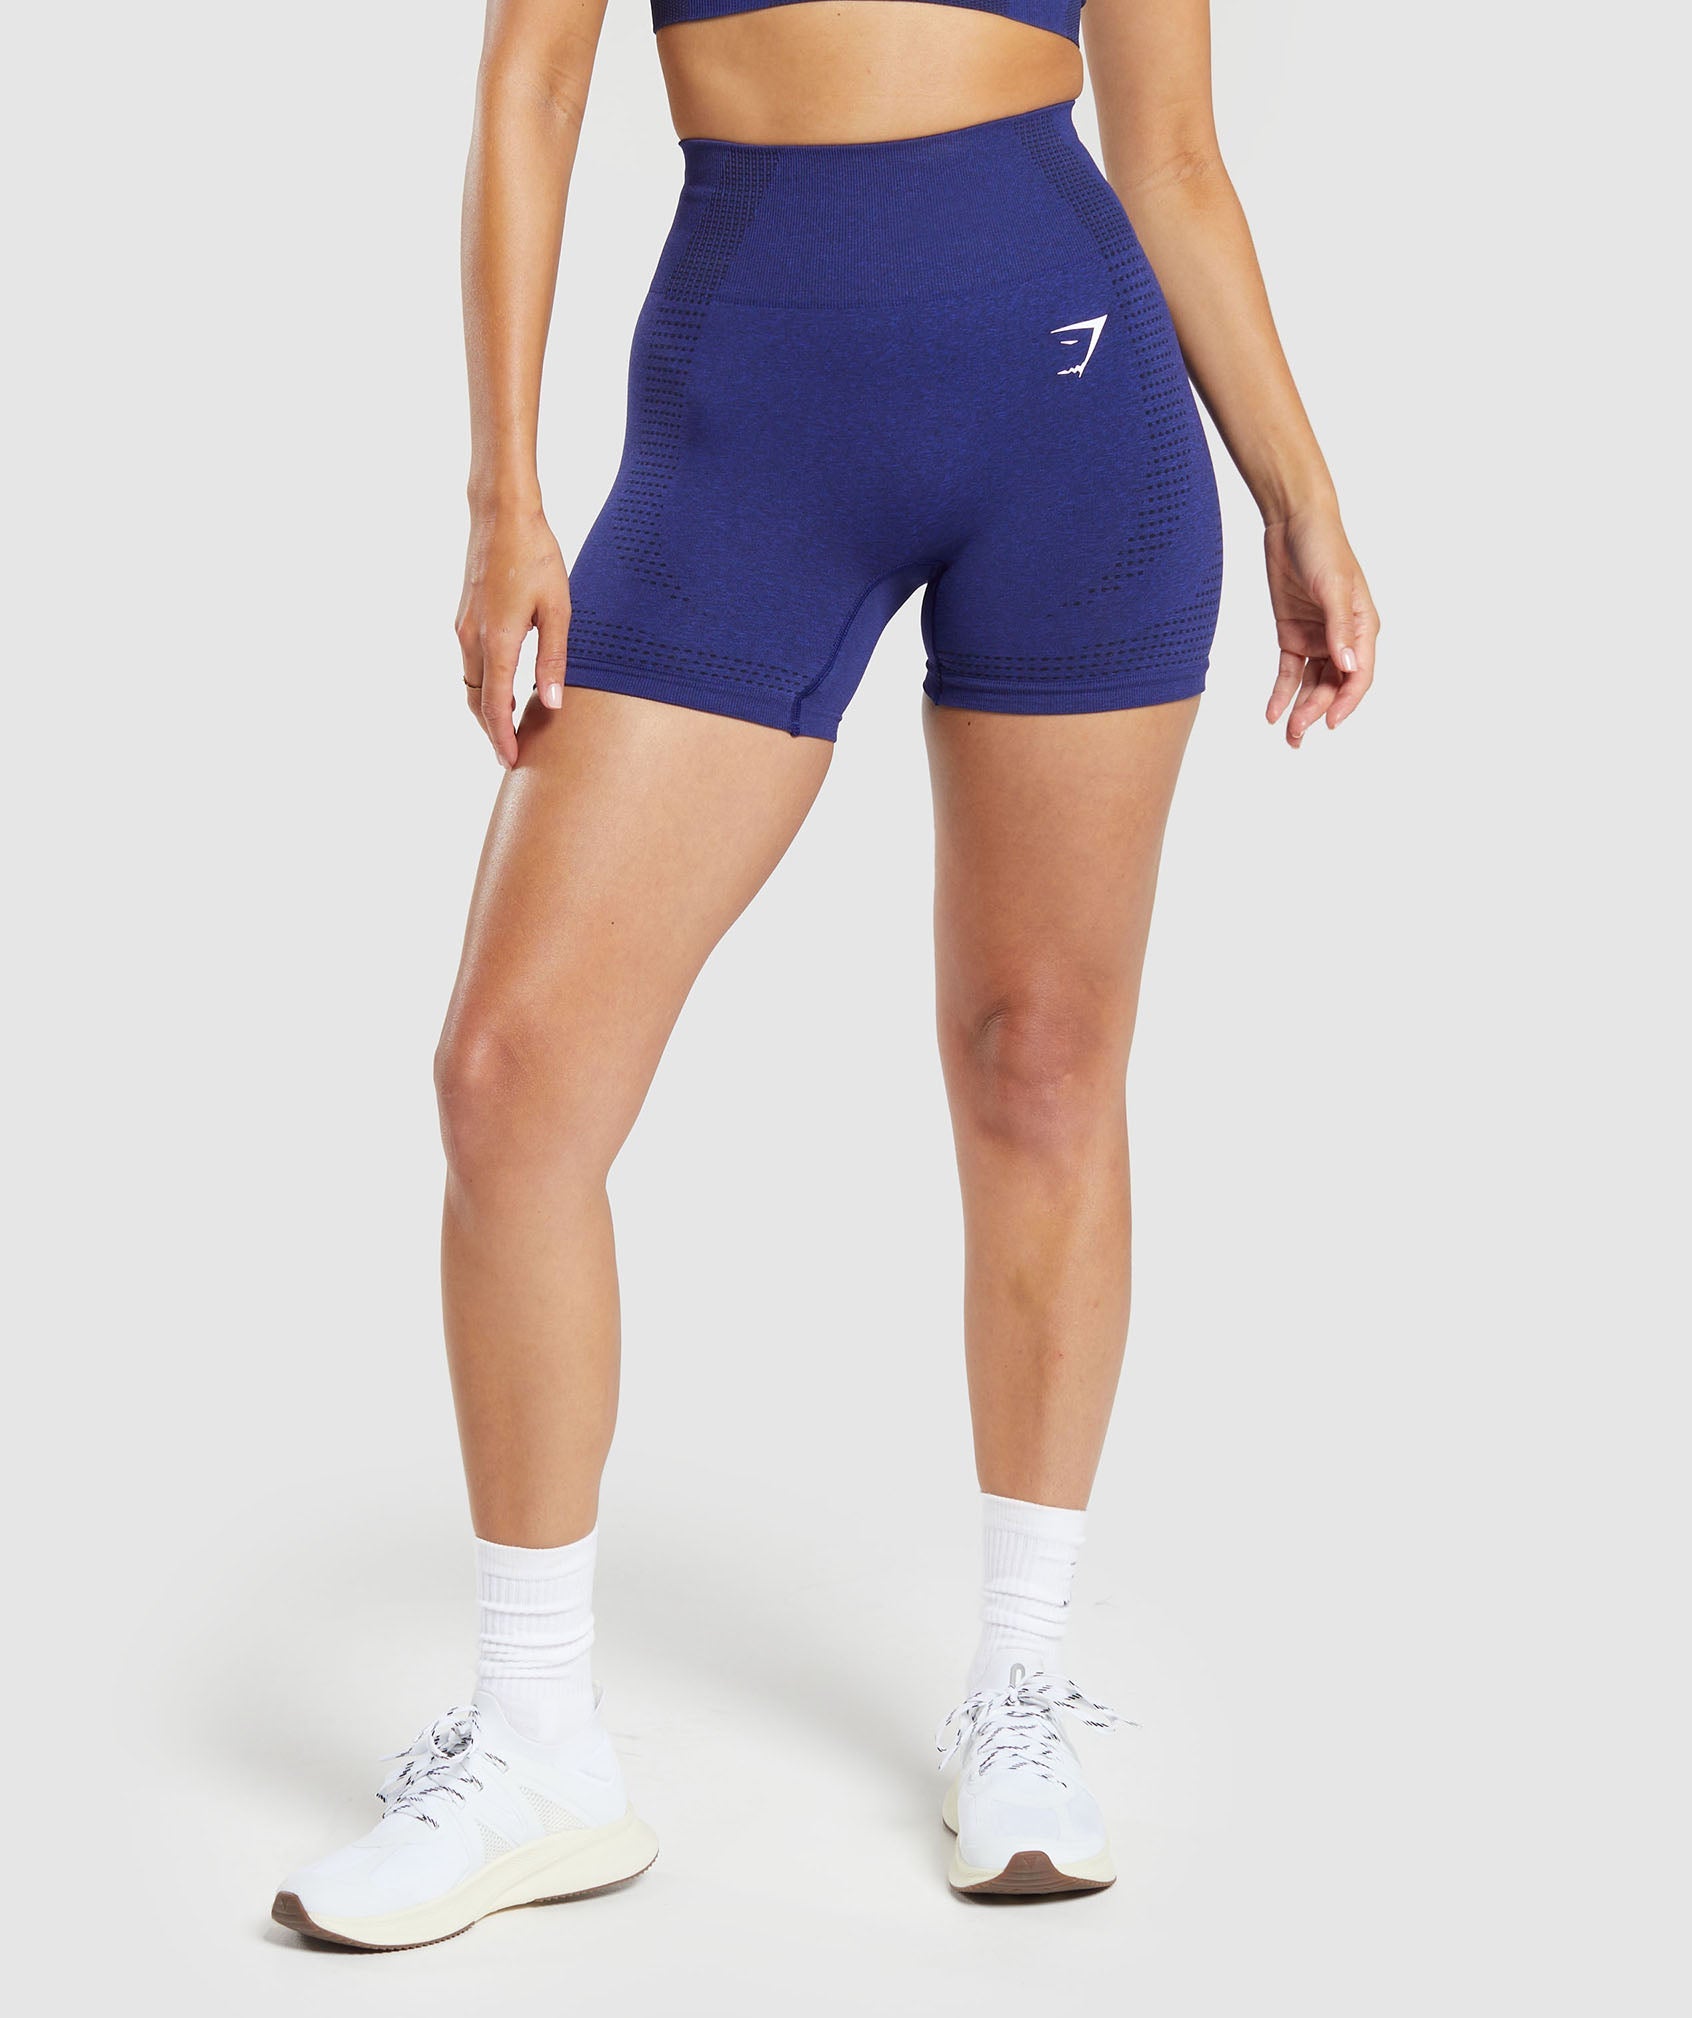 Darkterror Workout Shorts Women Spandex High Crossover Waist Gym Athletic  Yoga Running with Pockets(Beige,XS) at  Women's Clothing store